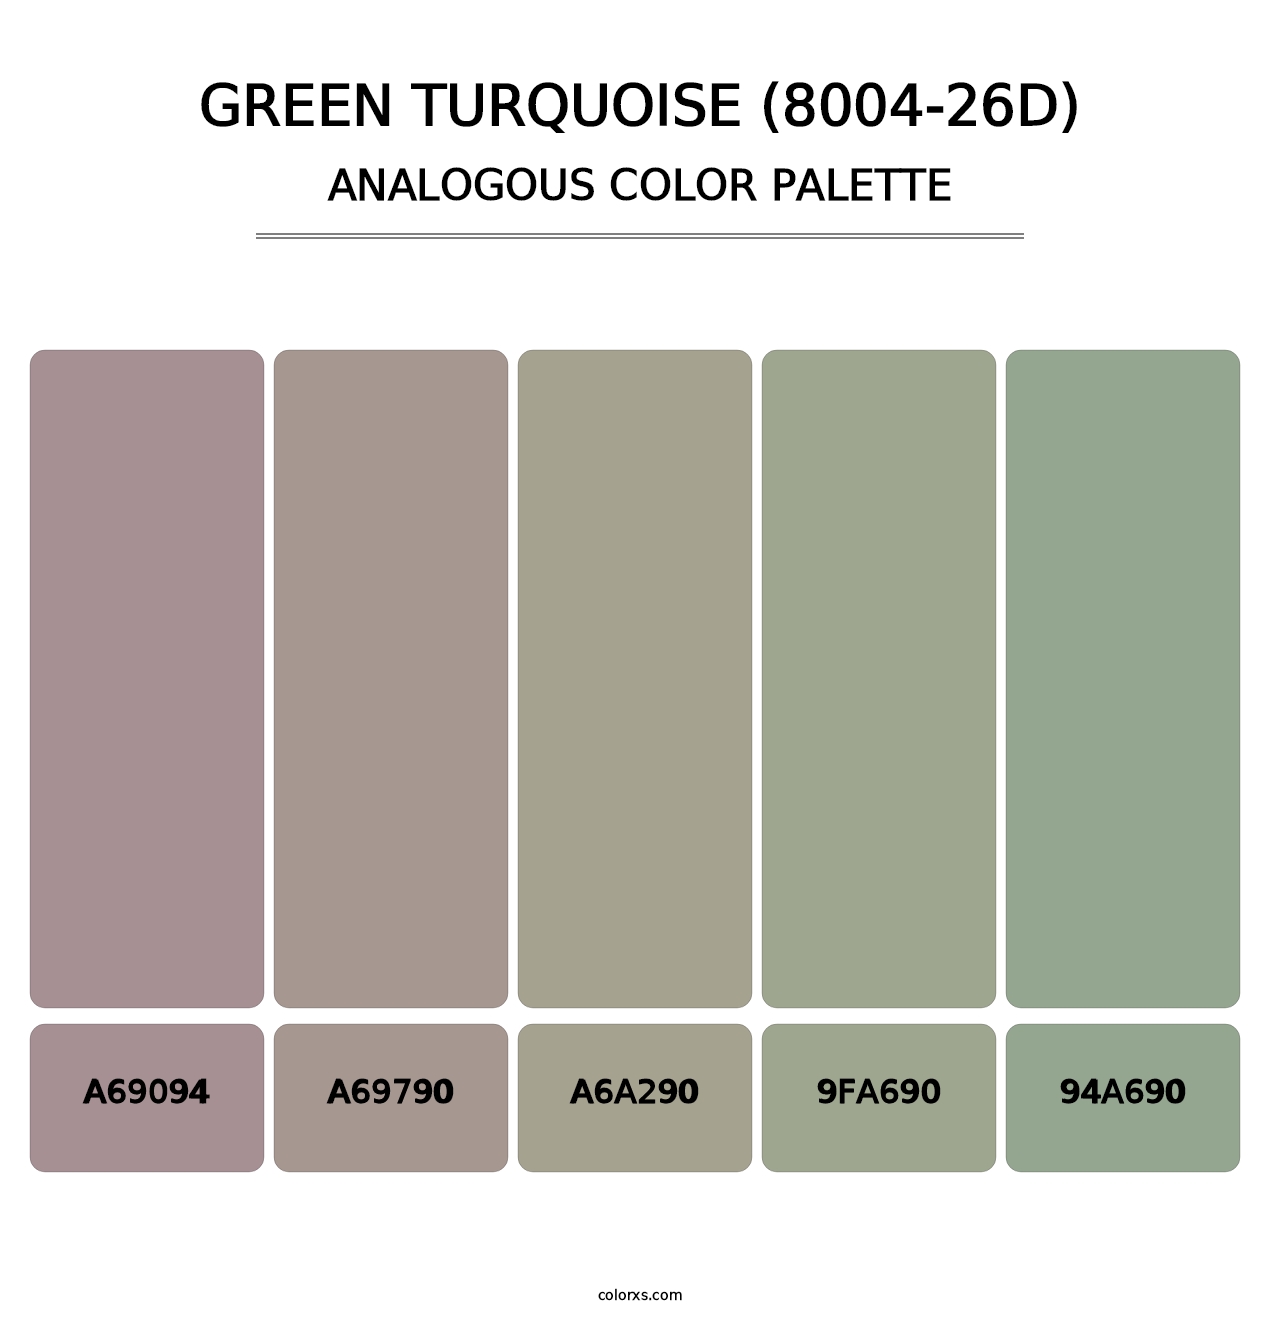 Green Turquoise (8004-26D) - Analogous Color Palette